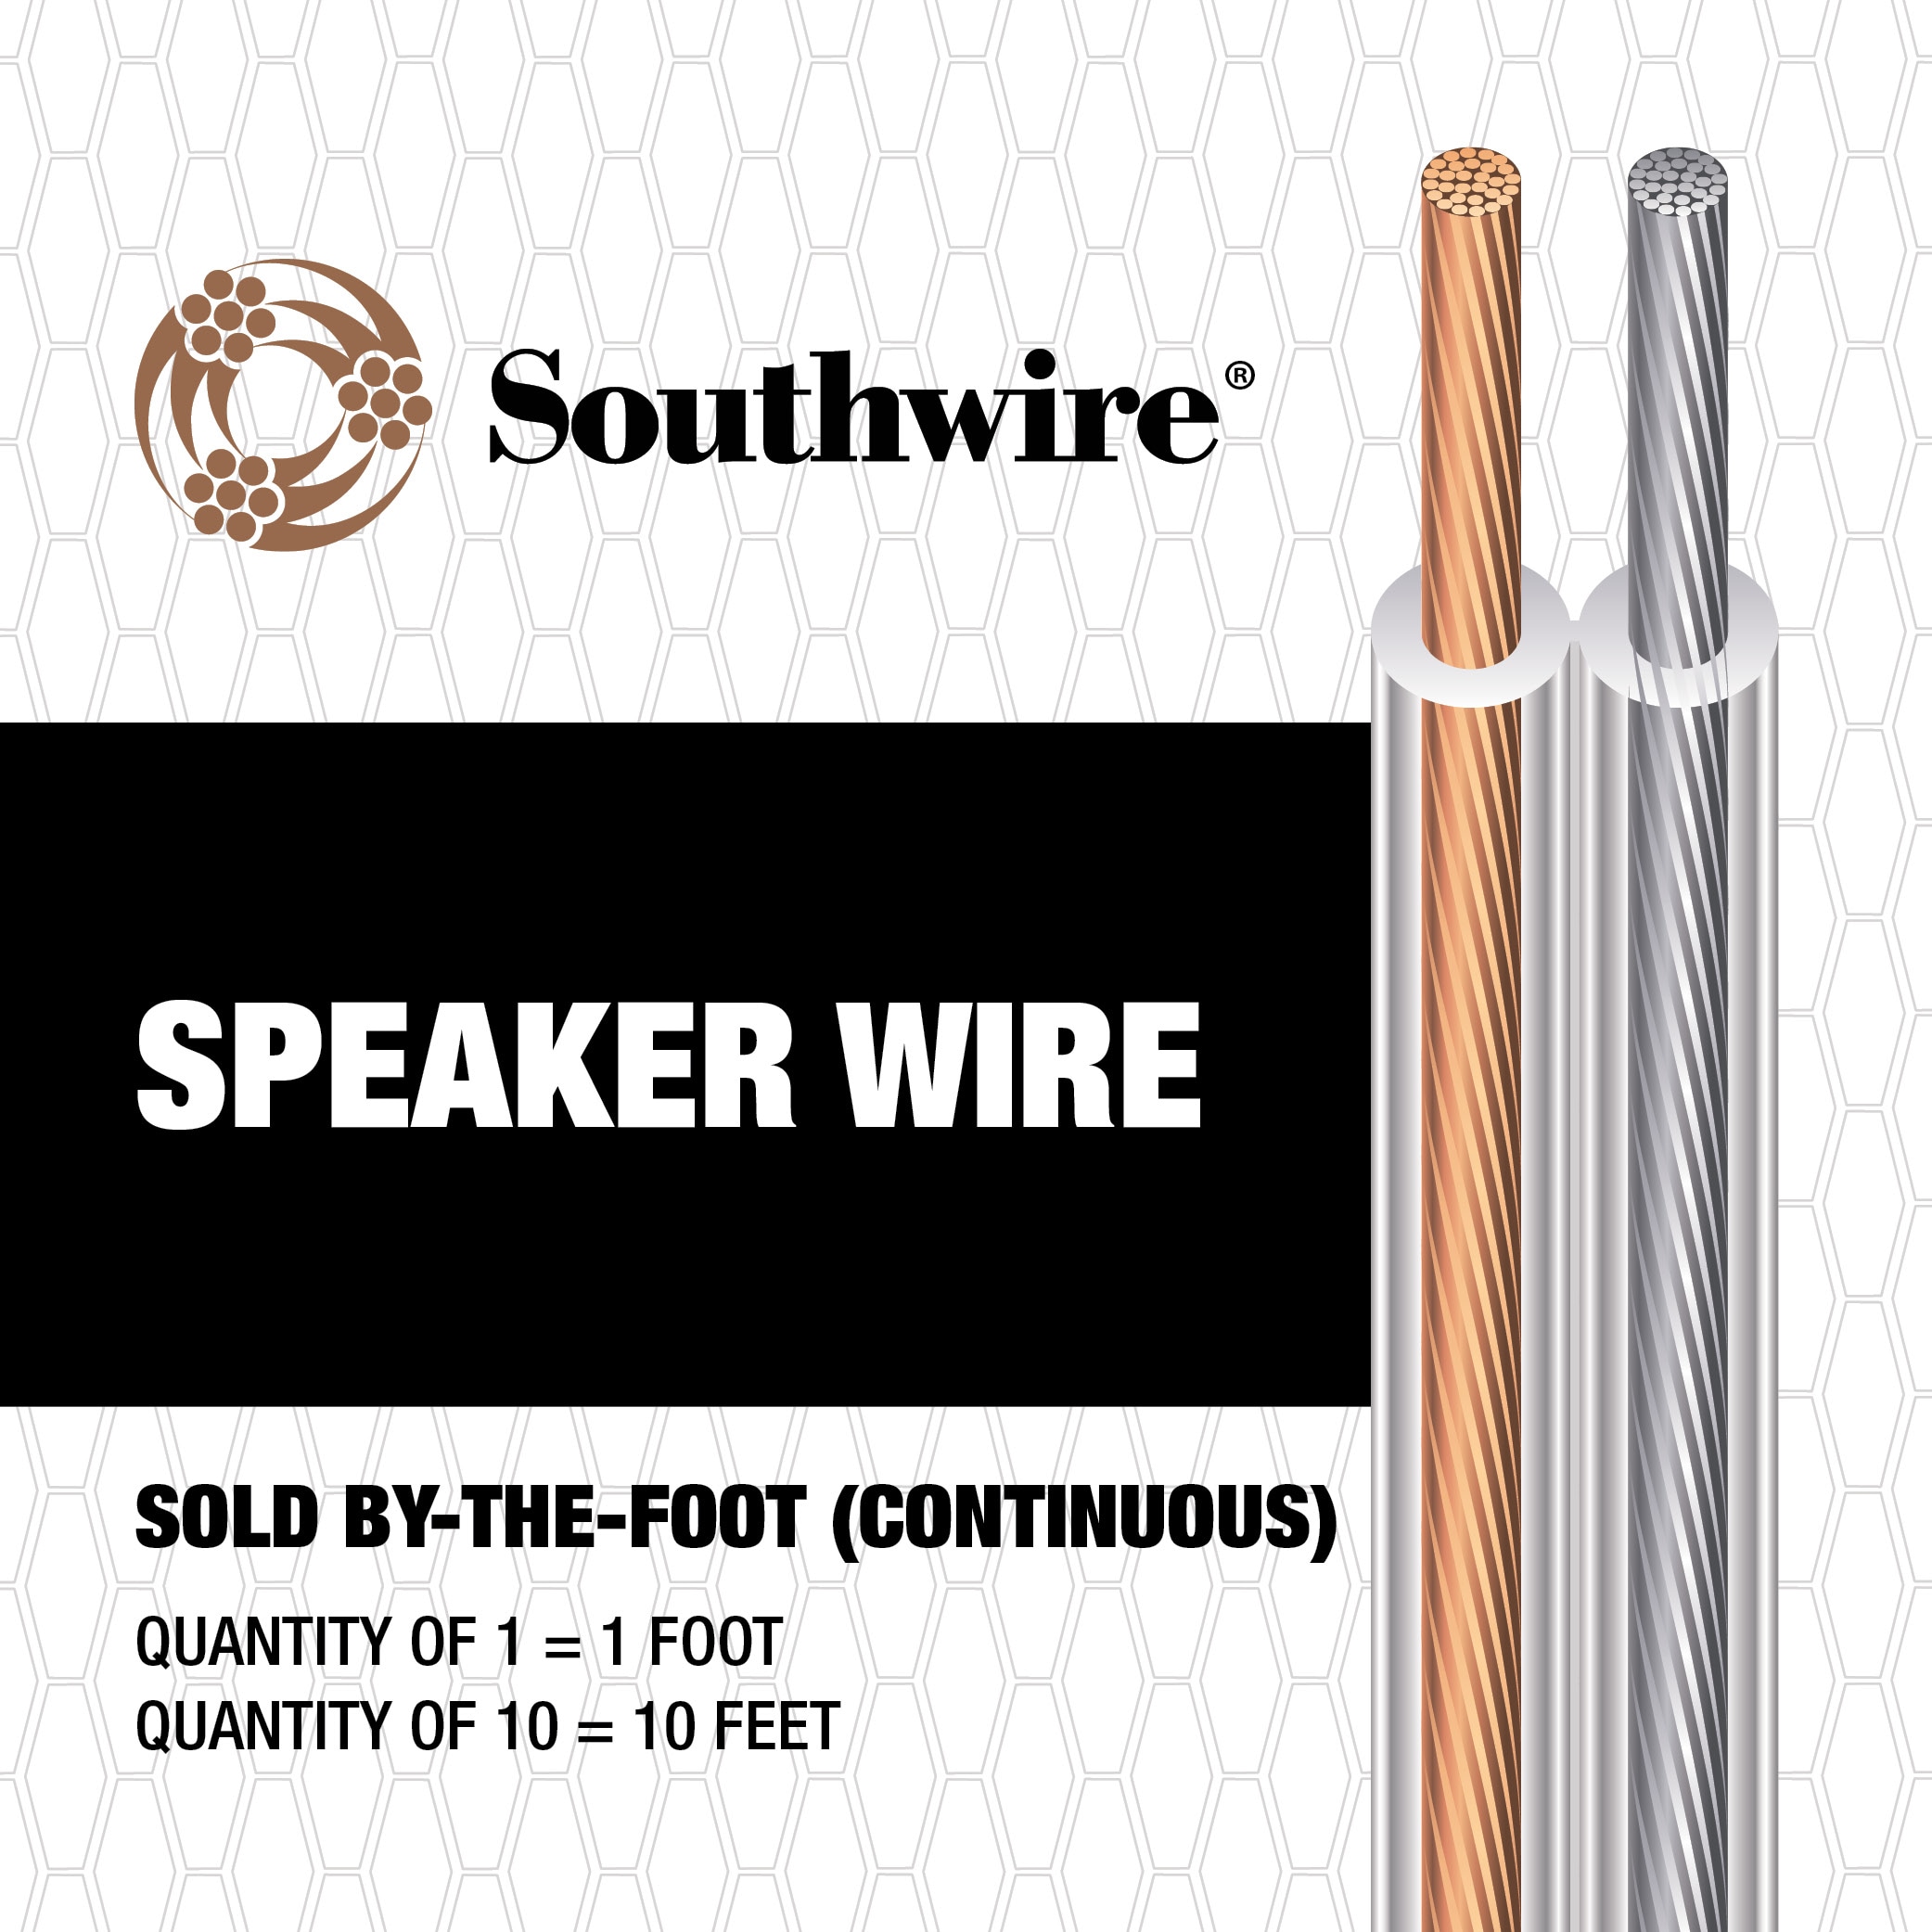 Southwire Electrician's Scissors